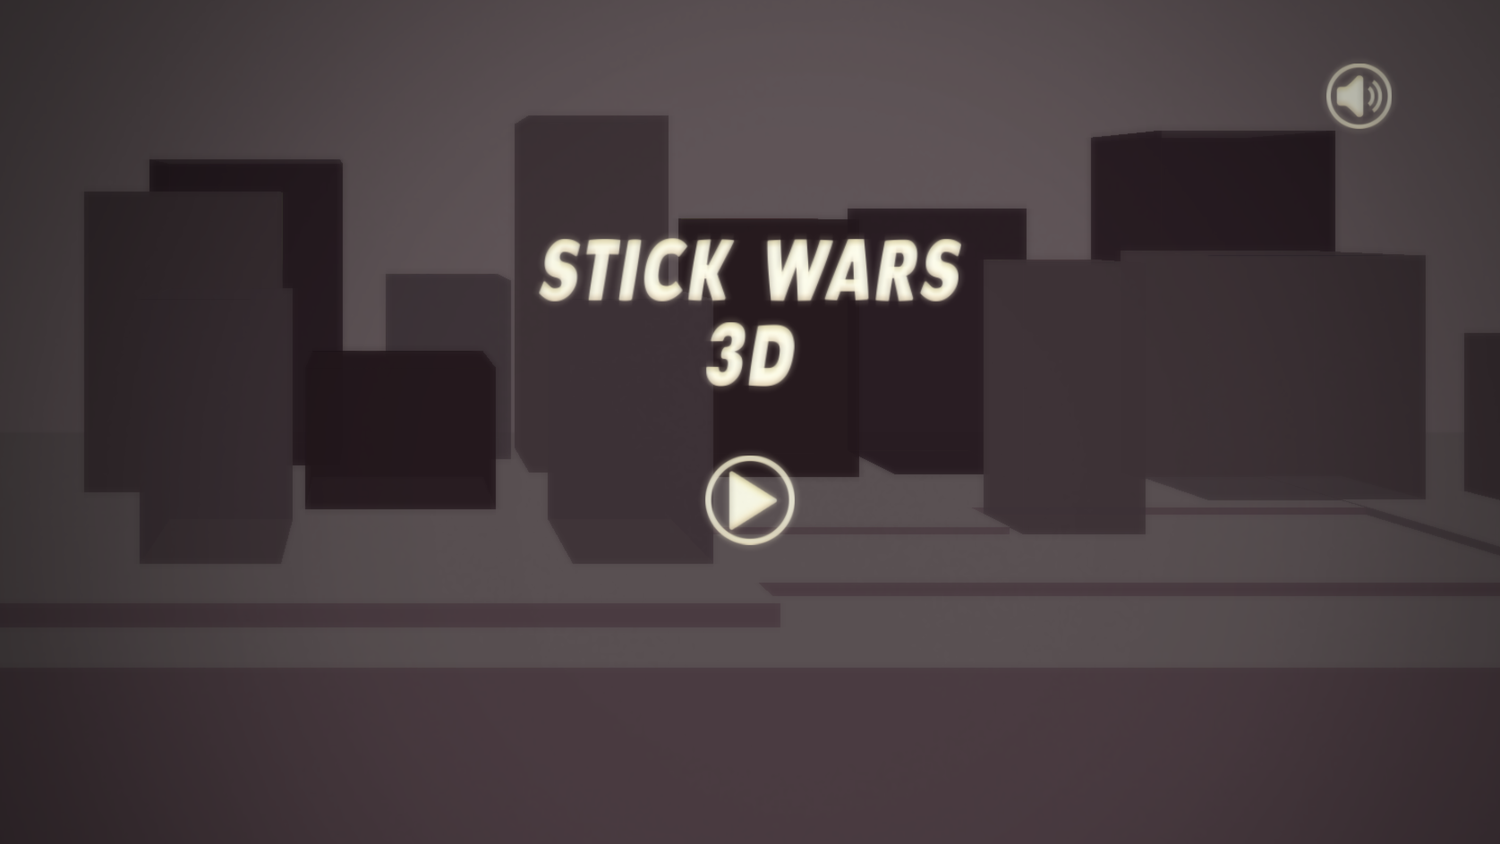 Stick Wars 3D Game Welcome Screen Screenshot.